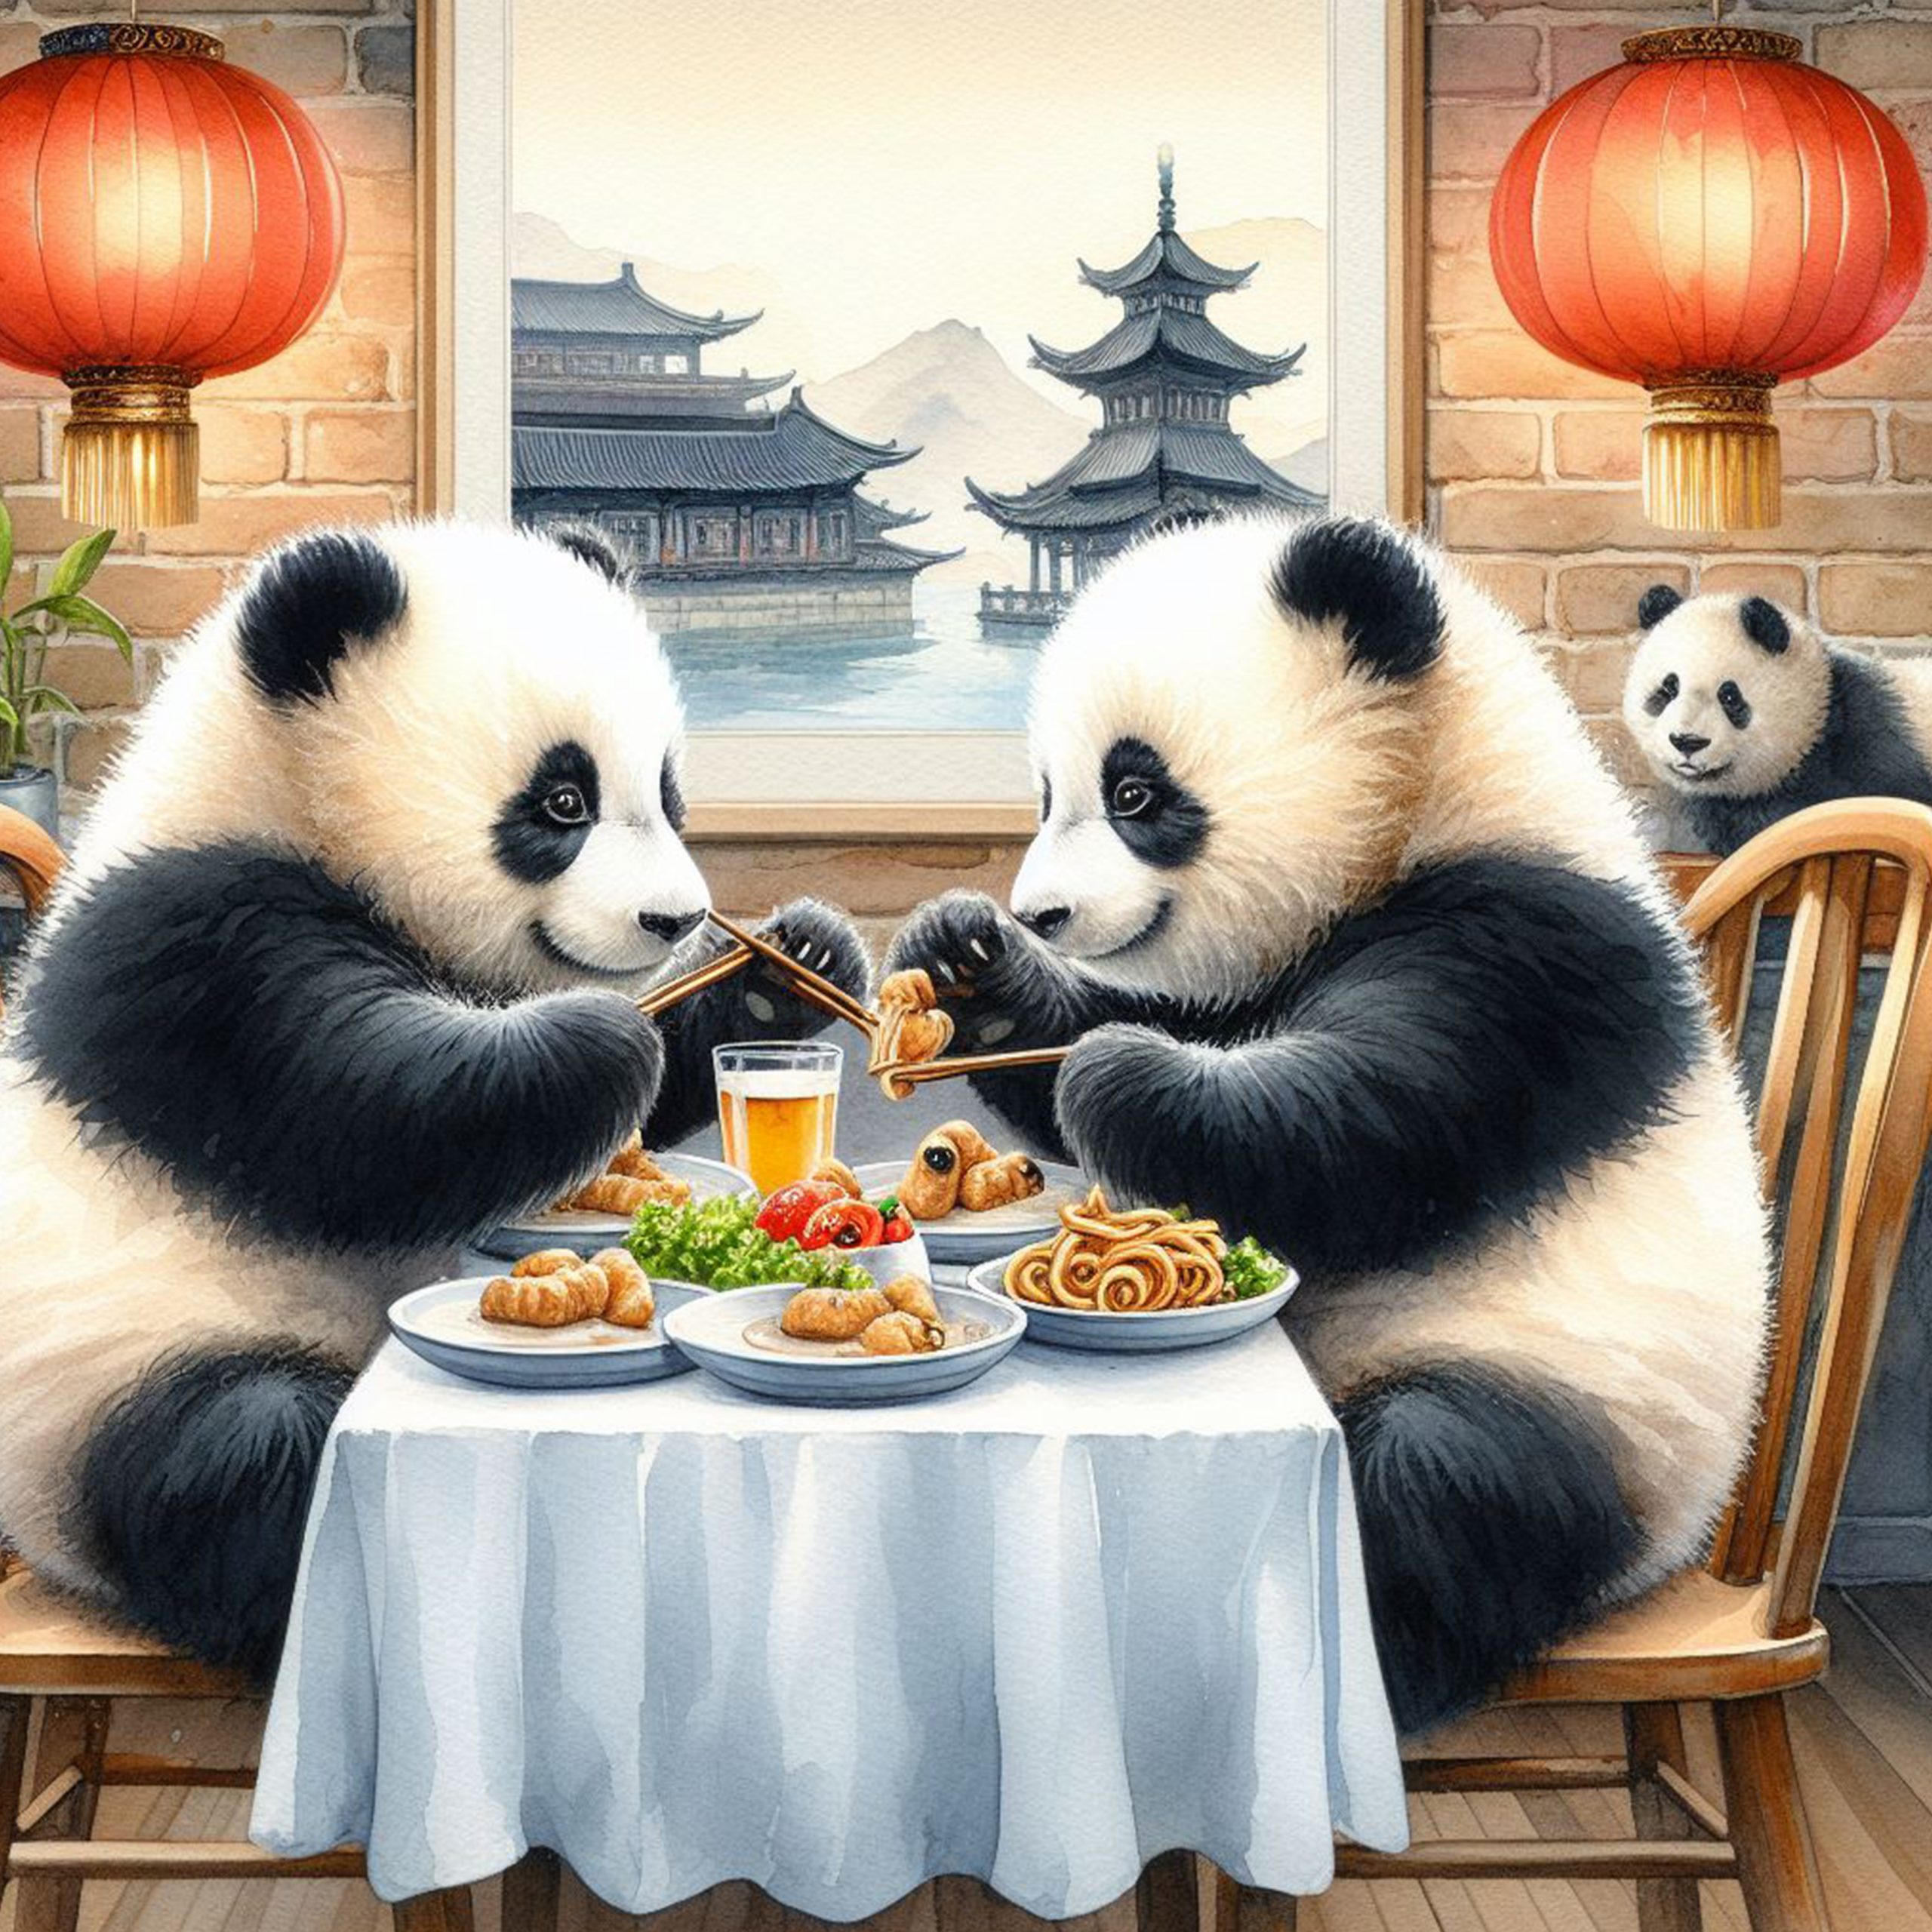 Osos panda comiendo en un restaurante de comida china